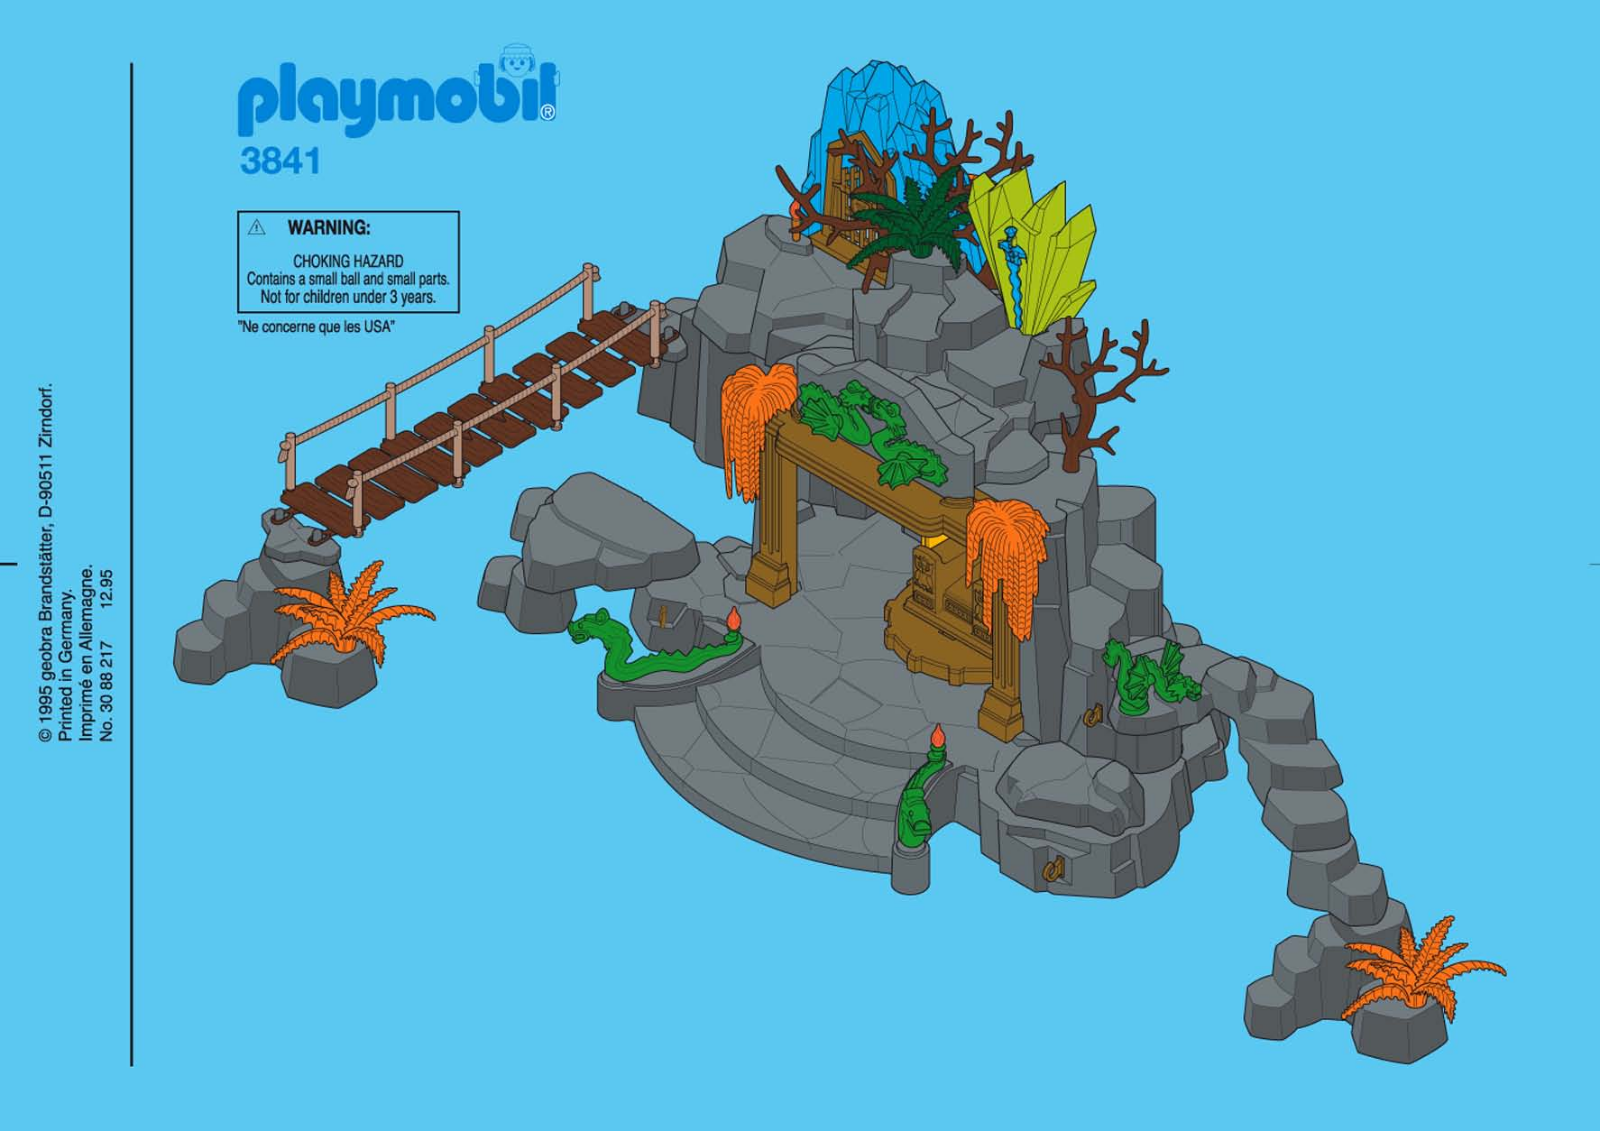 Playmobil 3841 Instructions